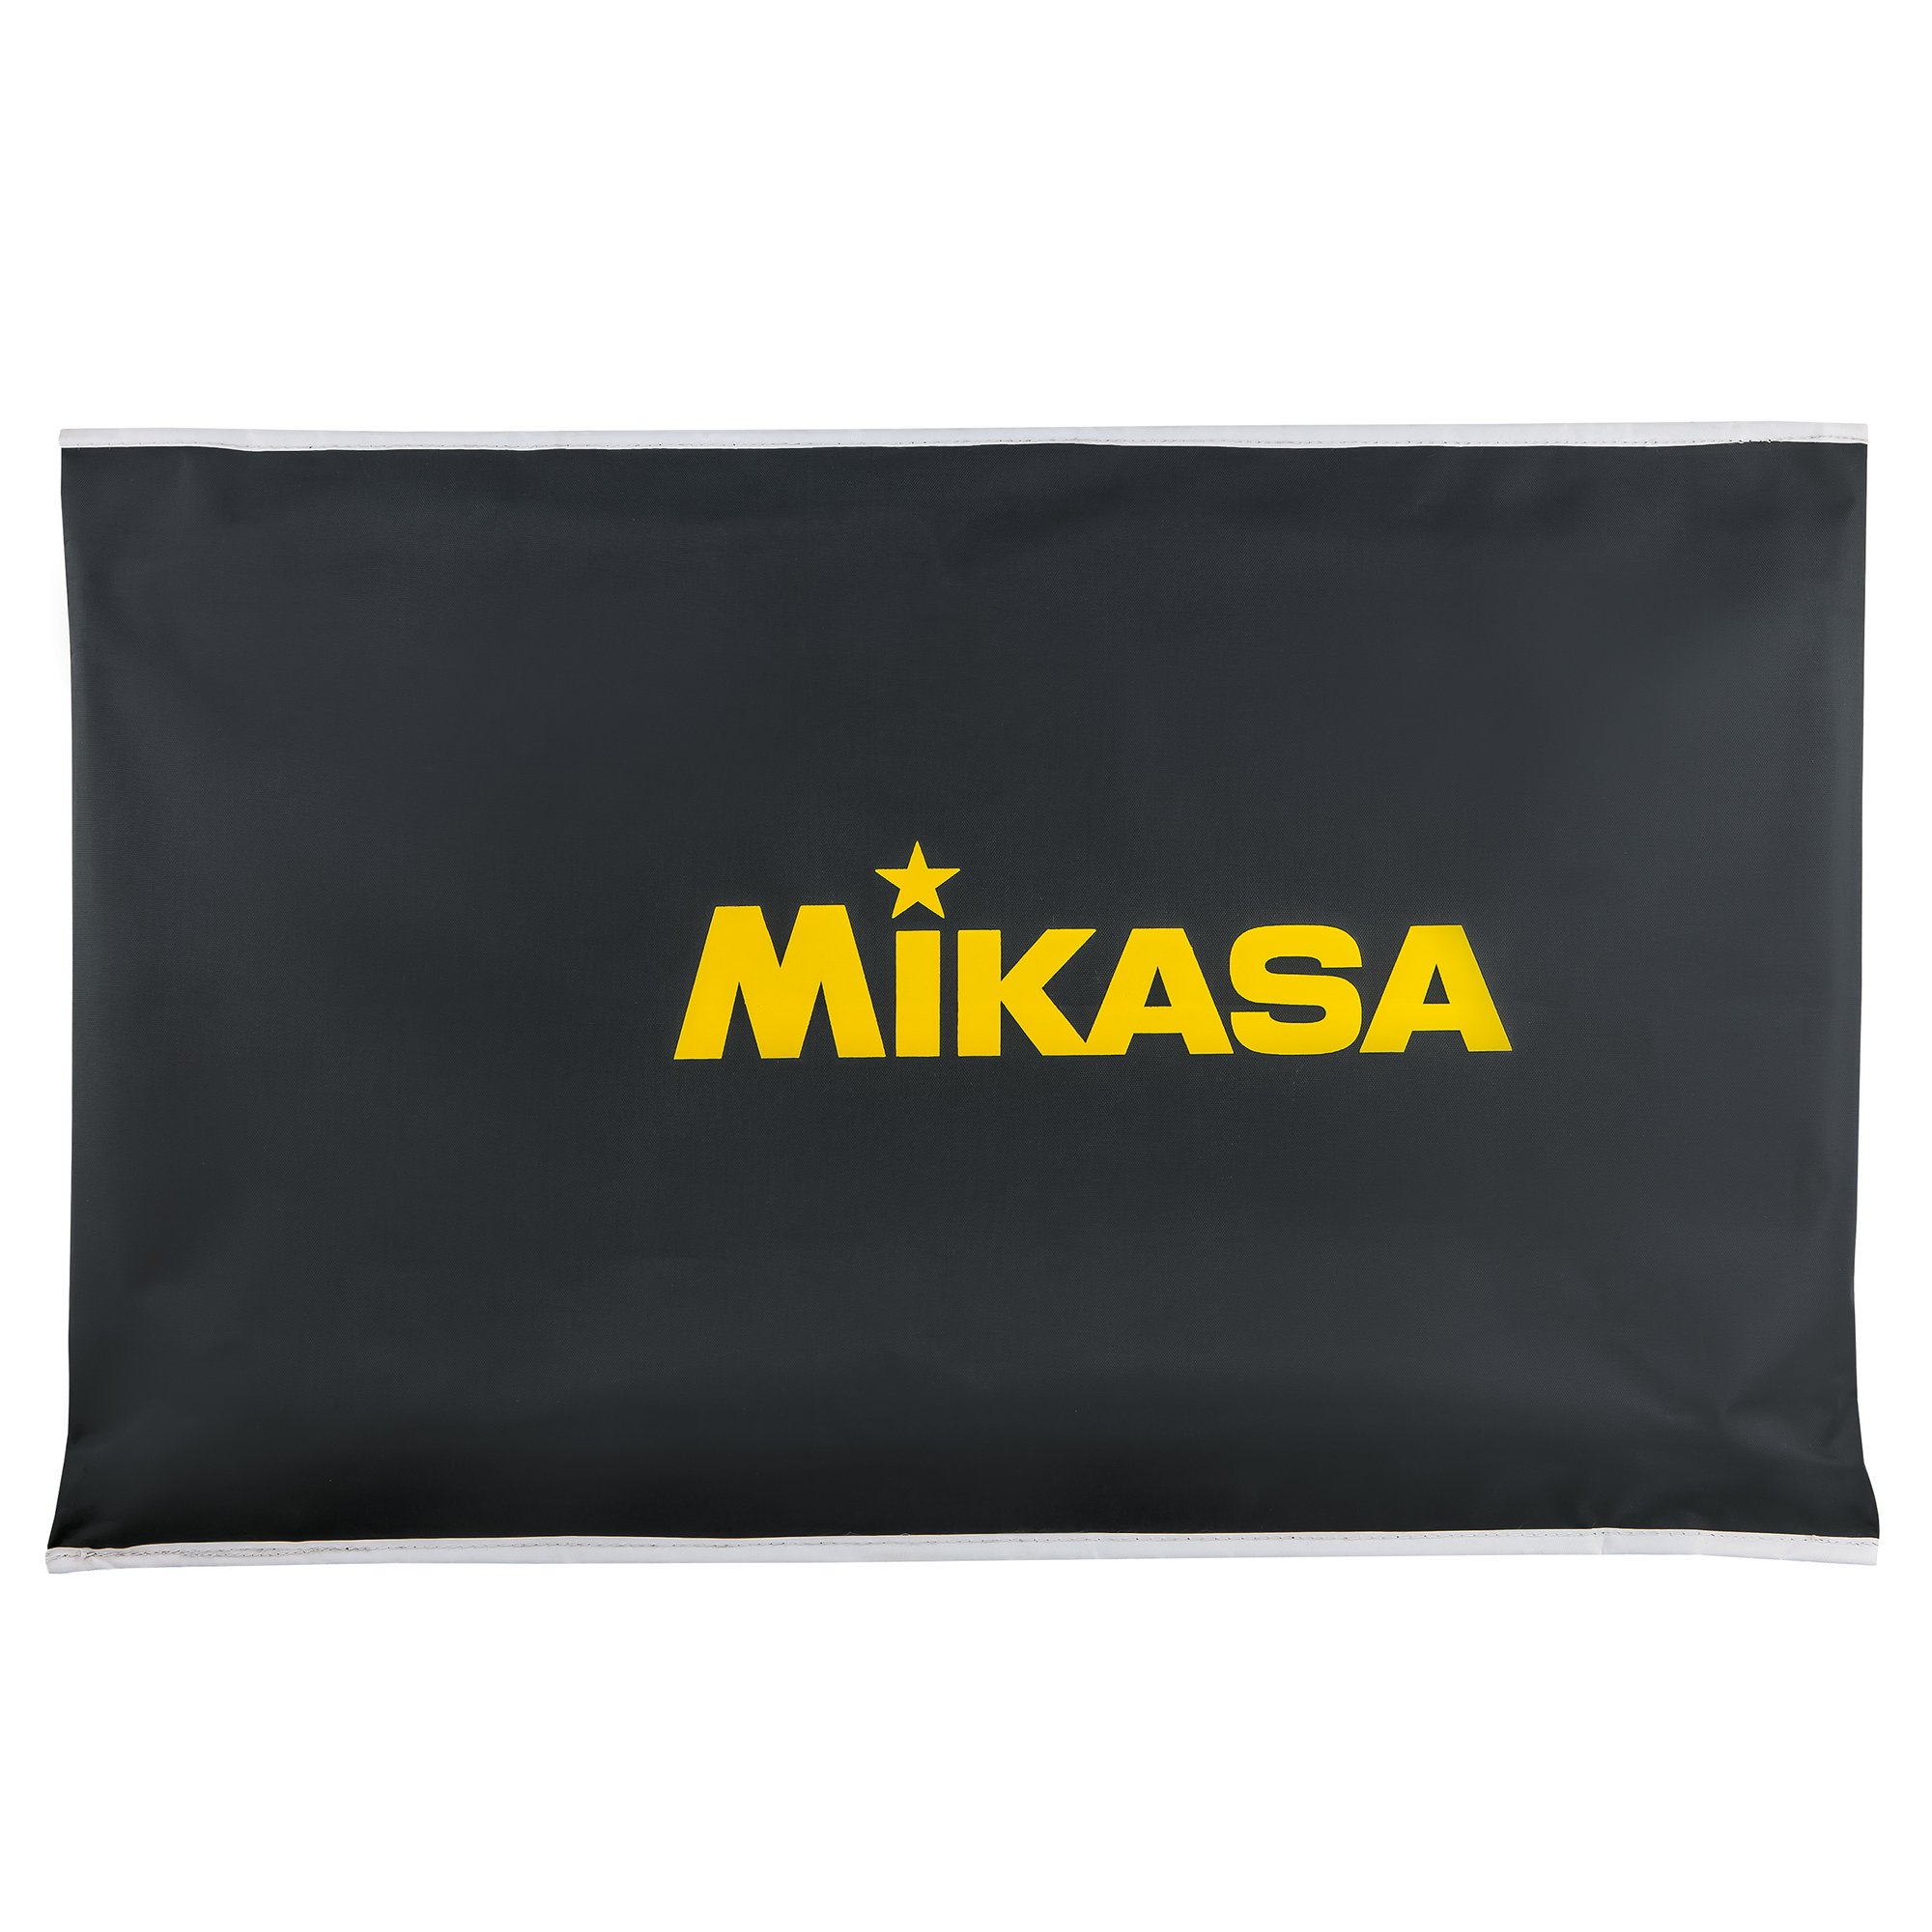 Mikasa Score Board Anzeigetafel